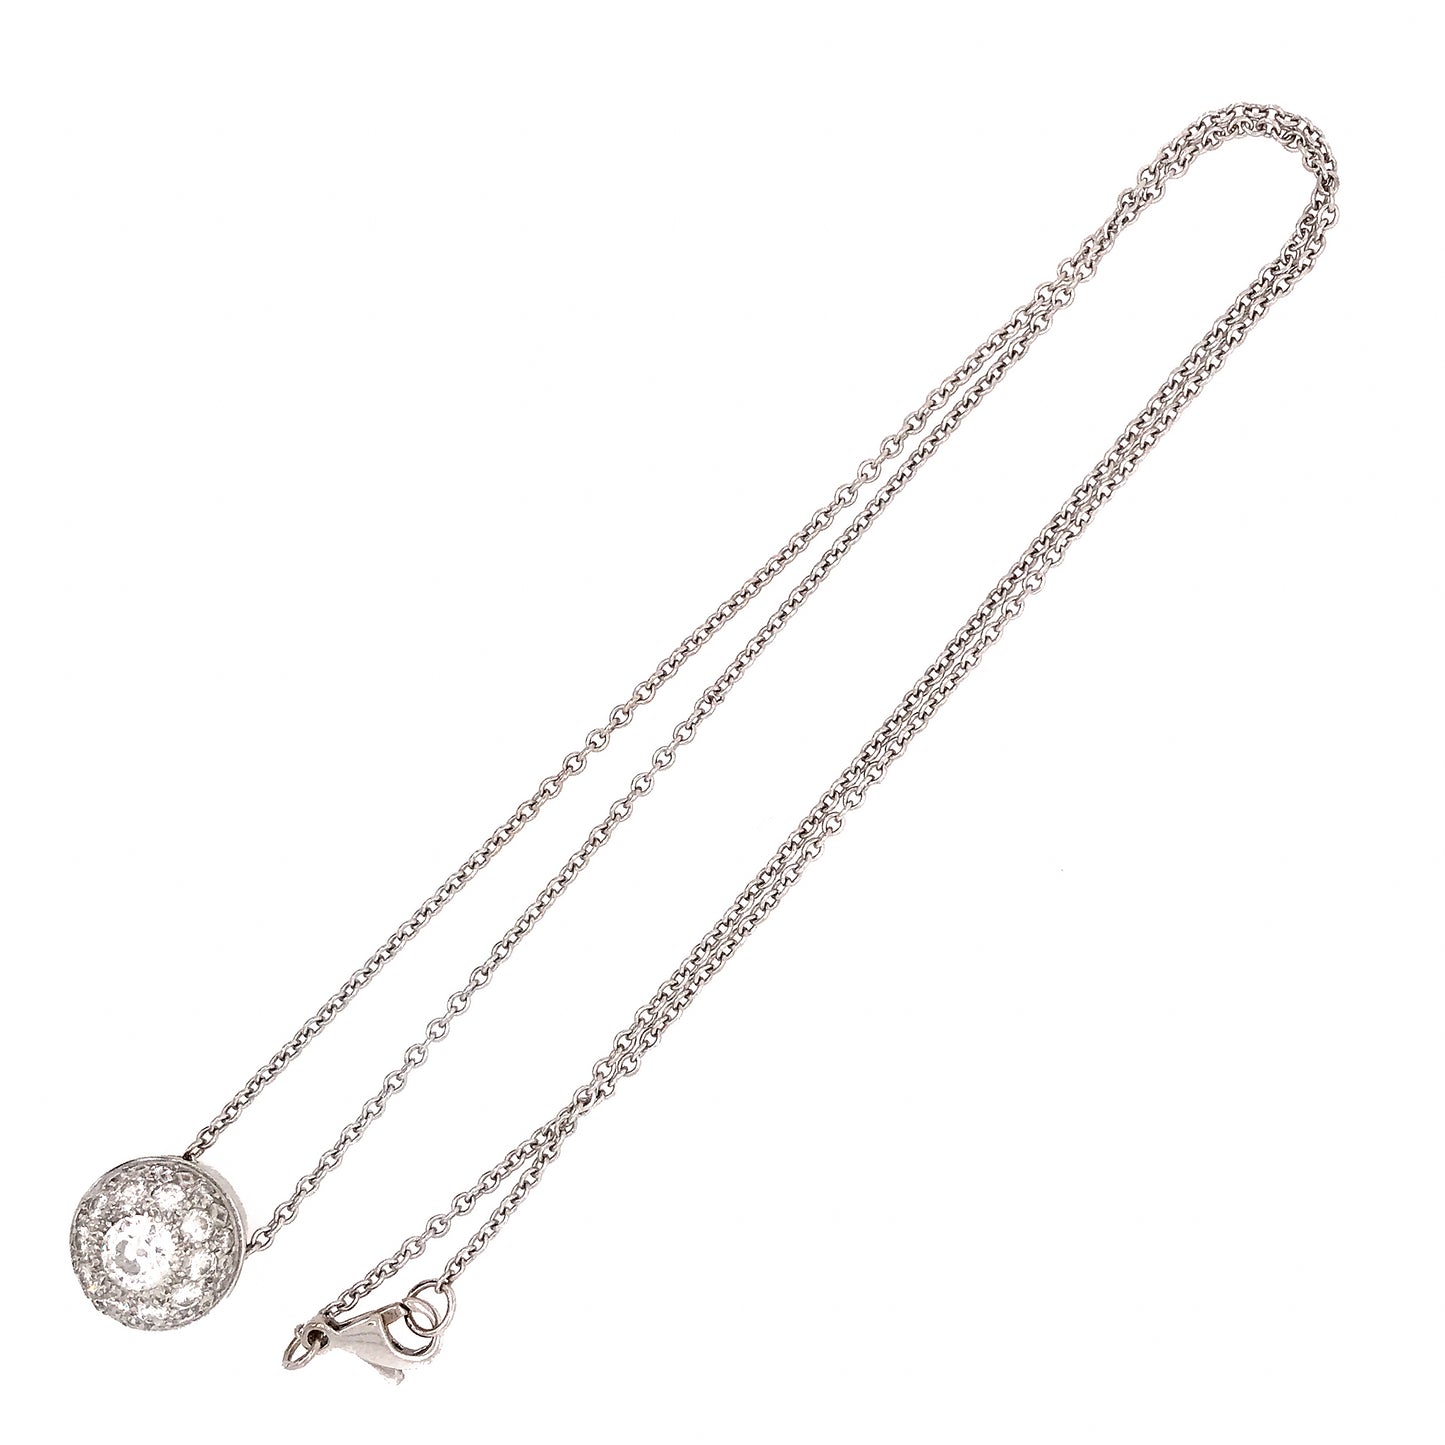 Vintage 14k White Gold Diamond Cluster Pendant Necklace